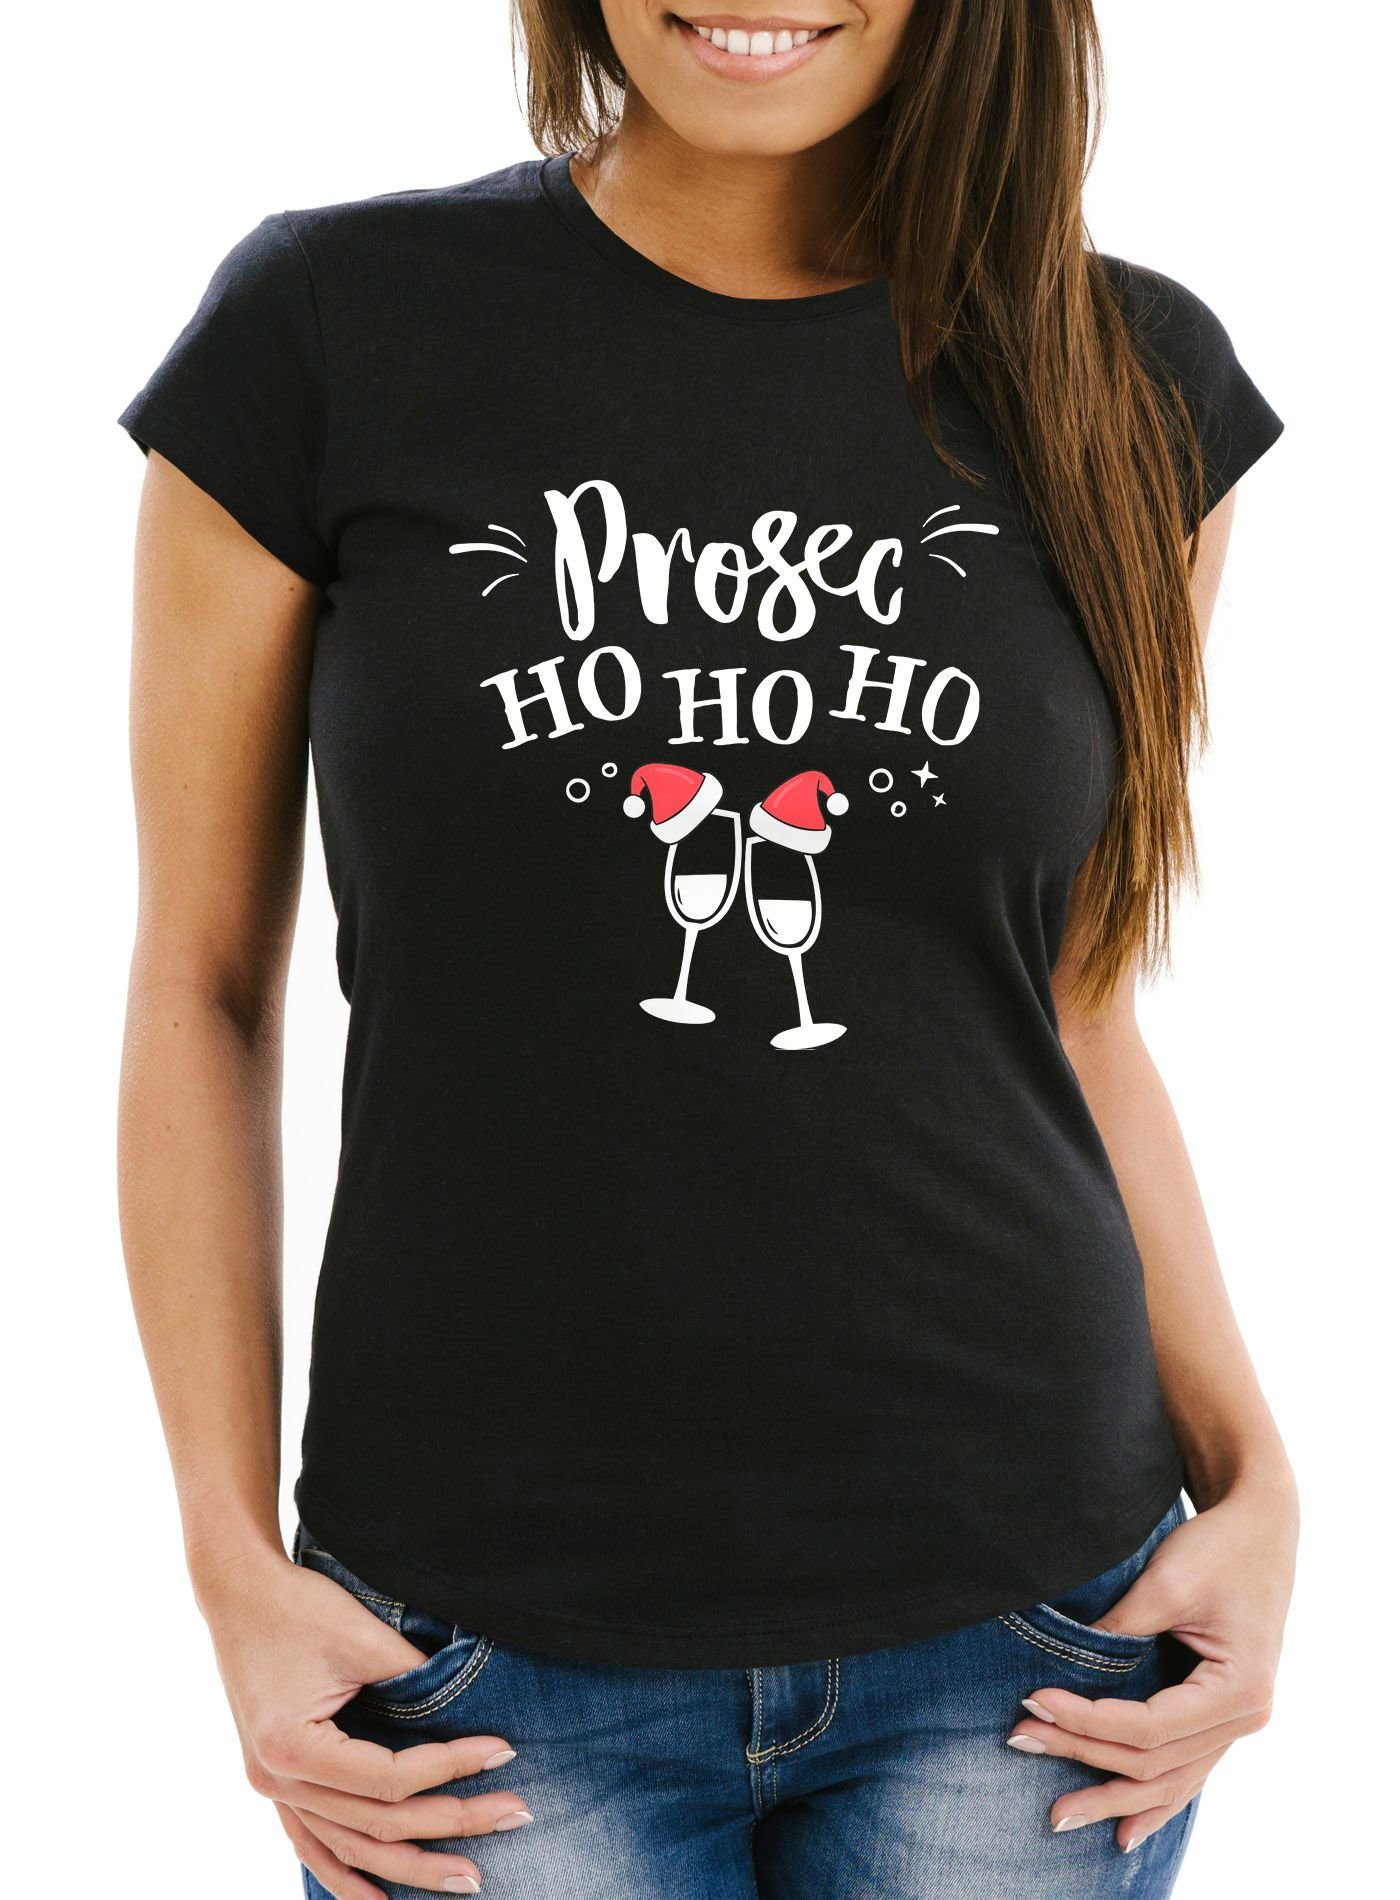 MoonWorks Print-Shirt Damen T-Shirt Weihnachten Lustig Prosecco HoHoHo Frauen Fun-Shirt Weih mit Print